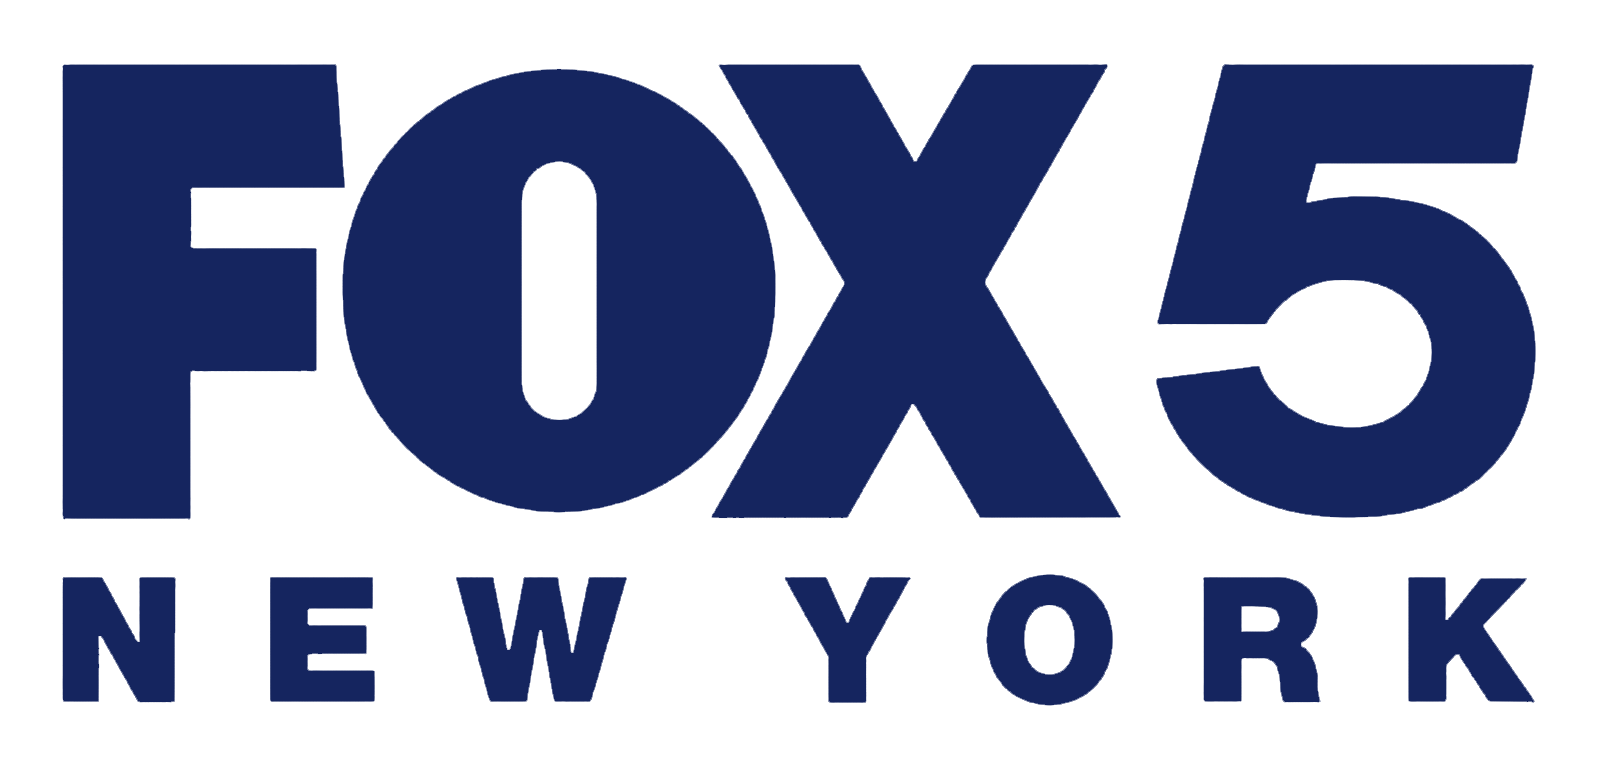 Fox 5 New York logo